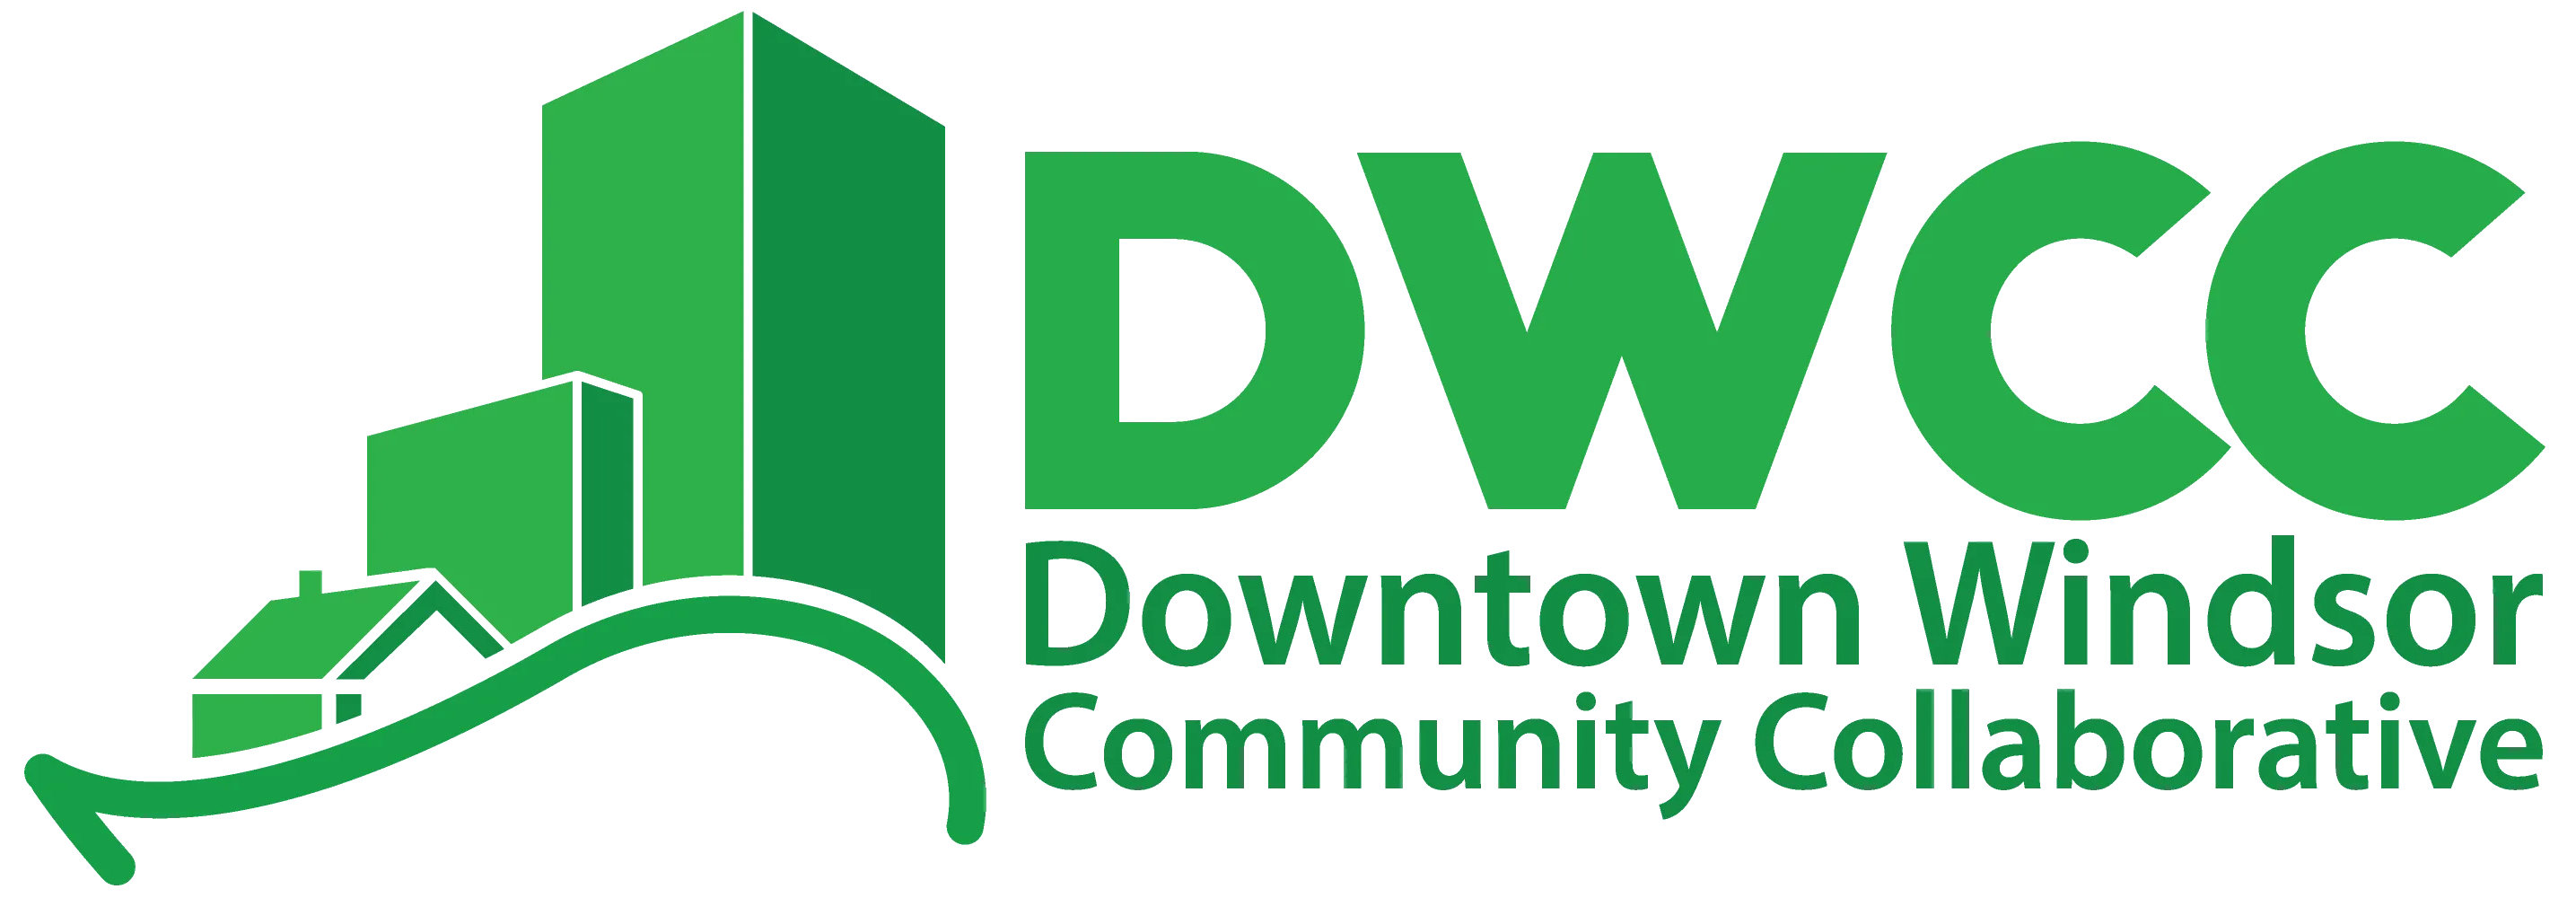 Downtown Windsor Community Collaborative logo